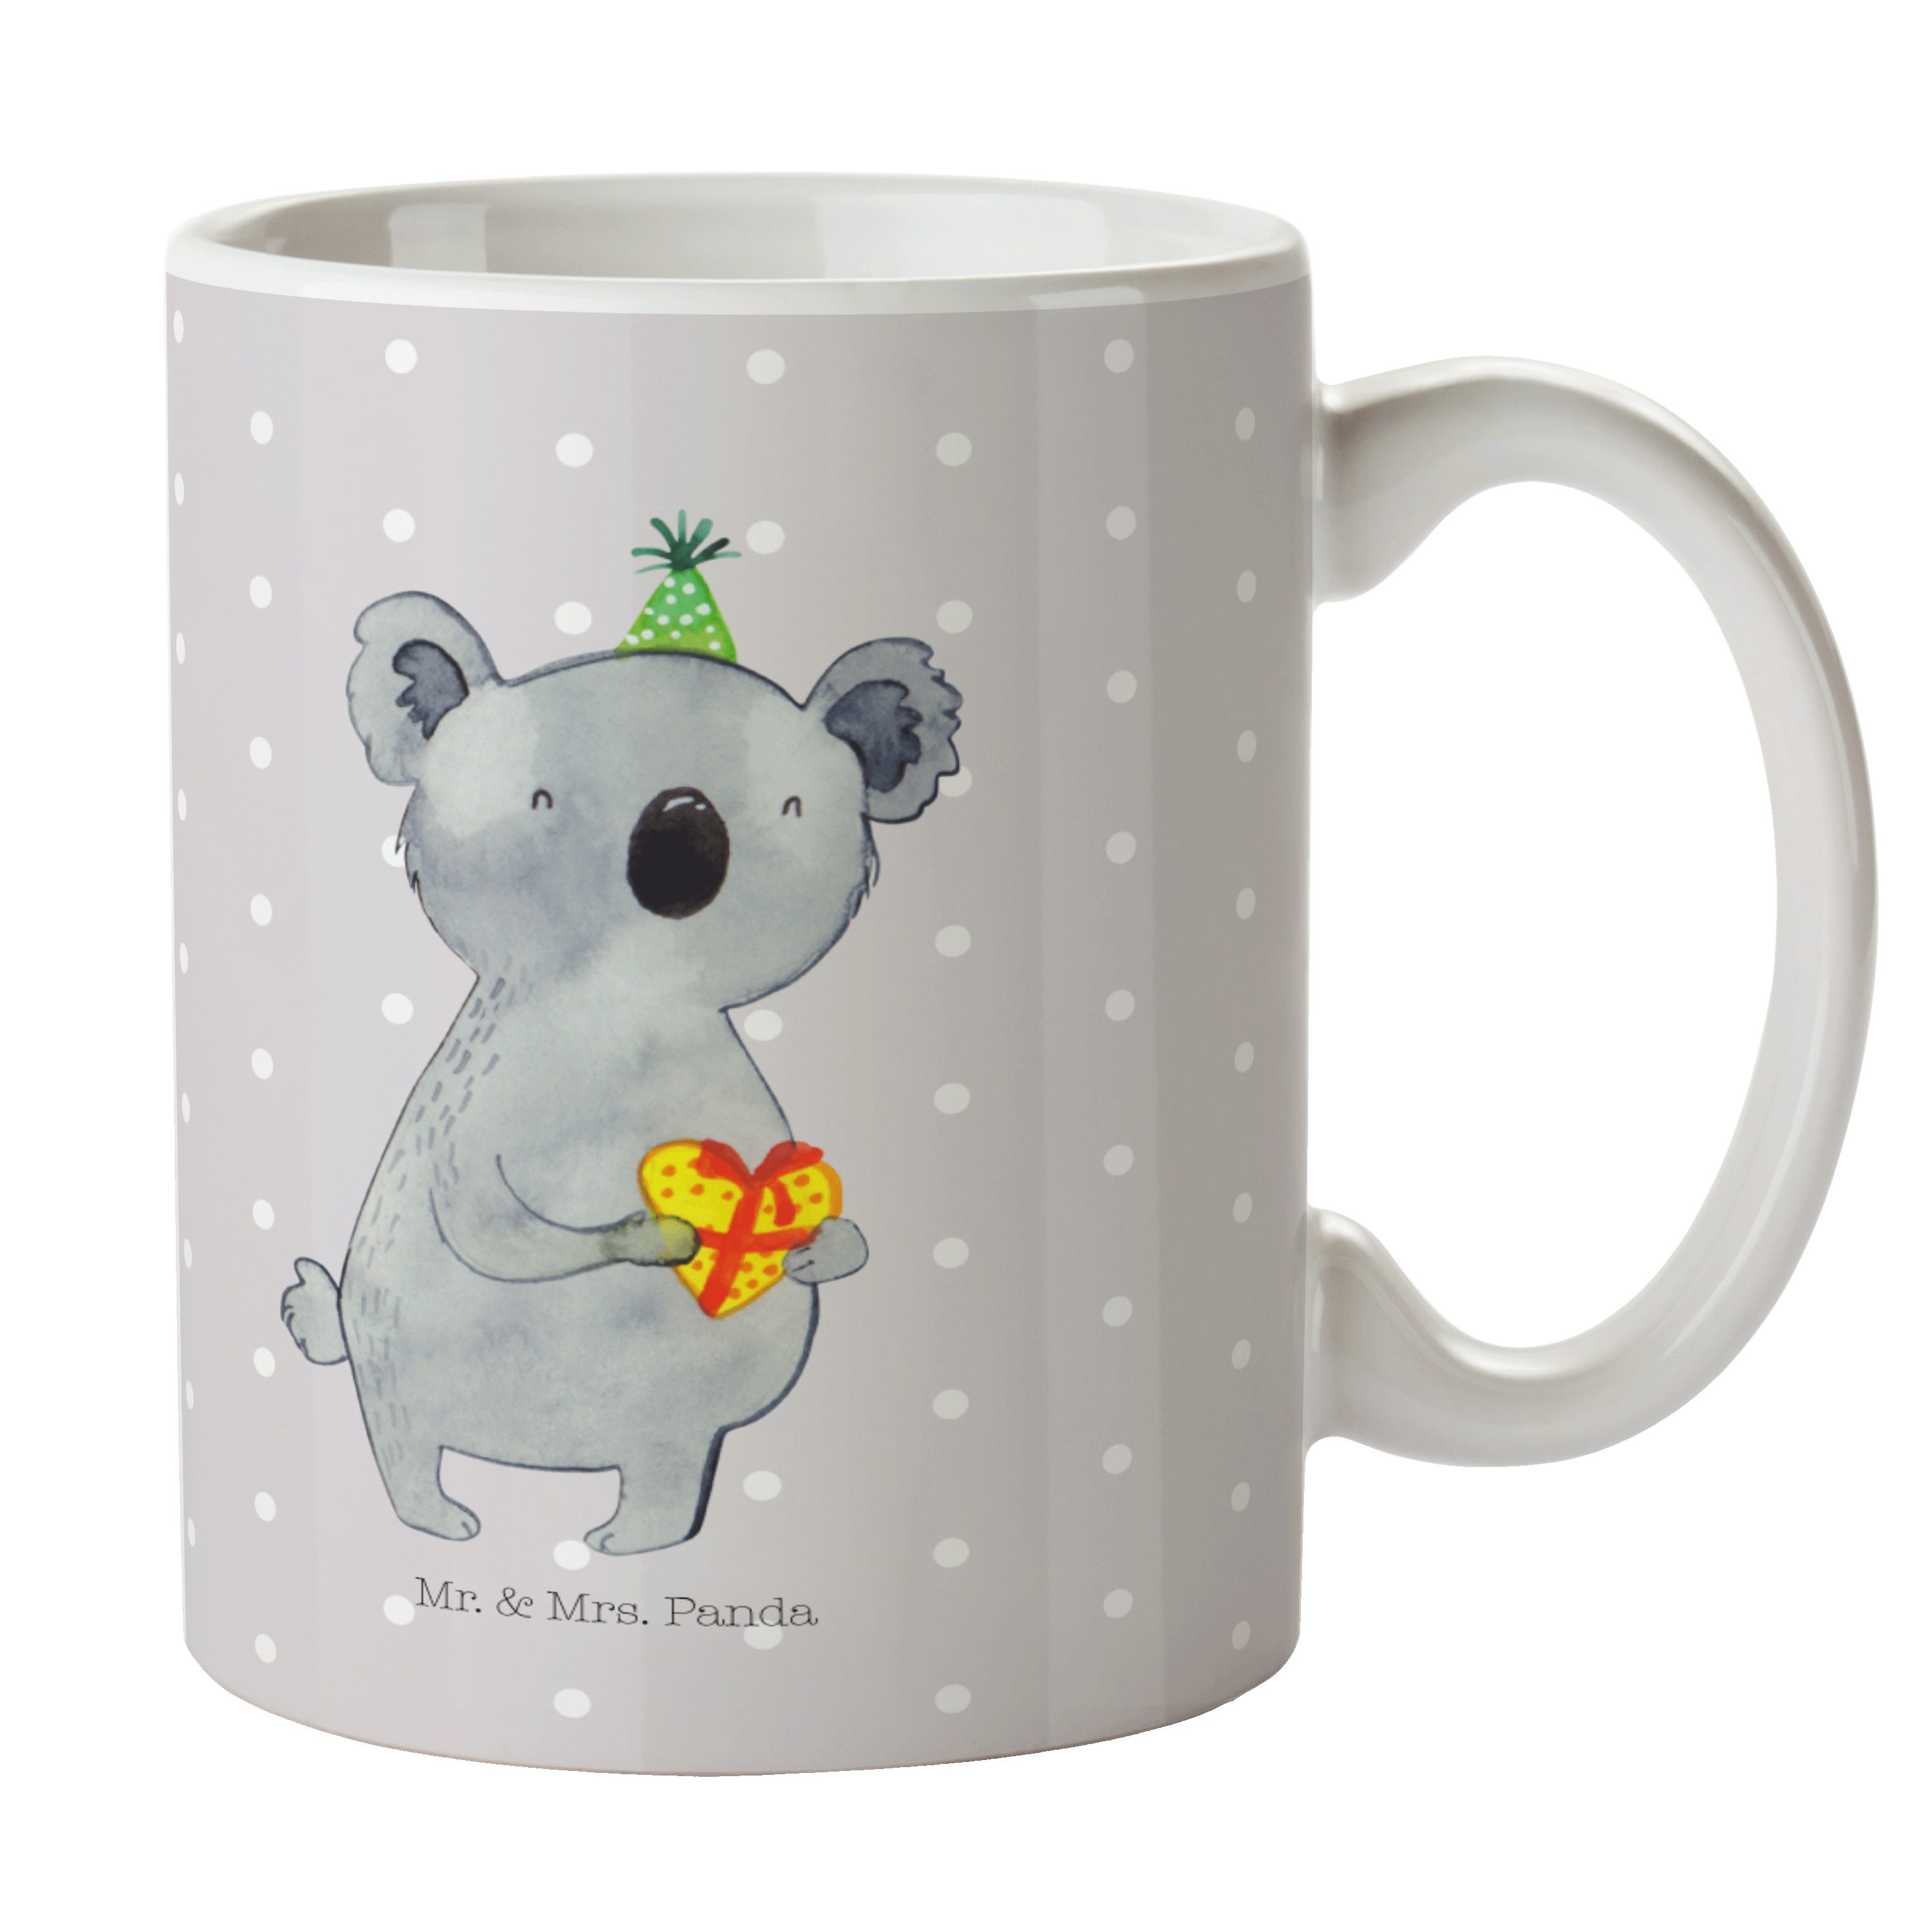 Mr. & Mrs. Panda Tasse Koala Geschenk - Grau Pastell - Kaffeebecher, Keramiktasse, Tasse, Bü, Keramik